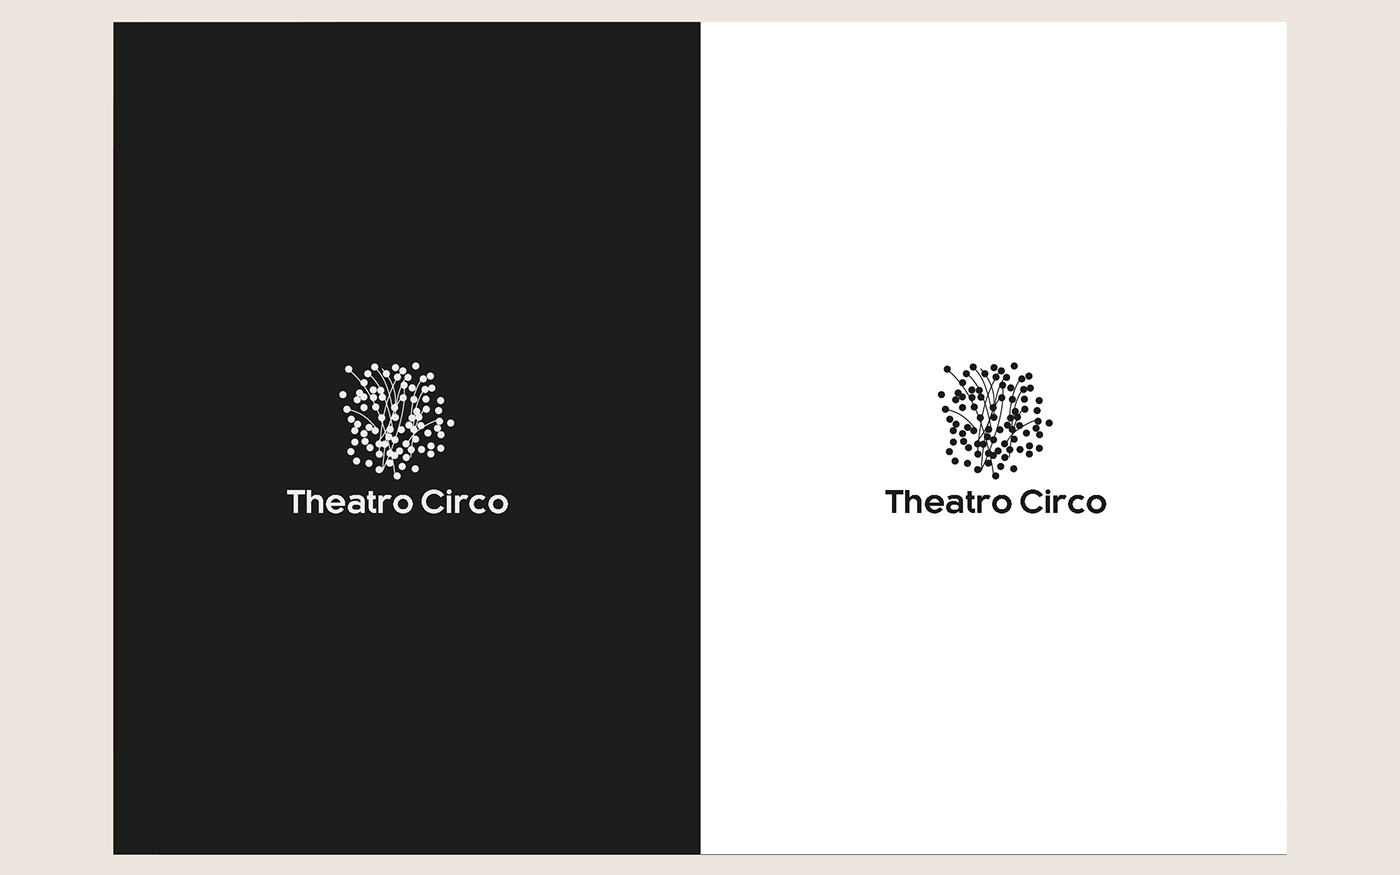 Braga ESAD Rebrand Theatre theatro theatro circo graphic design  visual identity ESAD Matosinhos